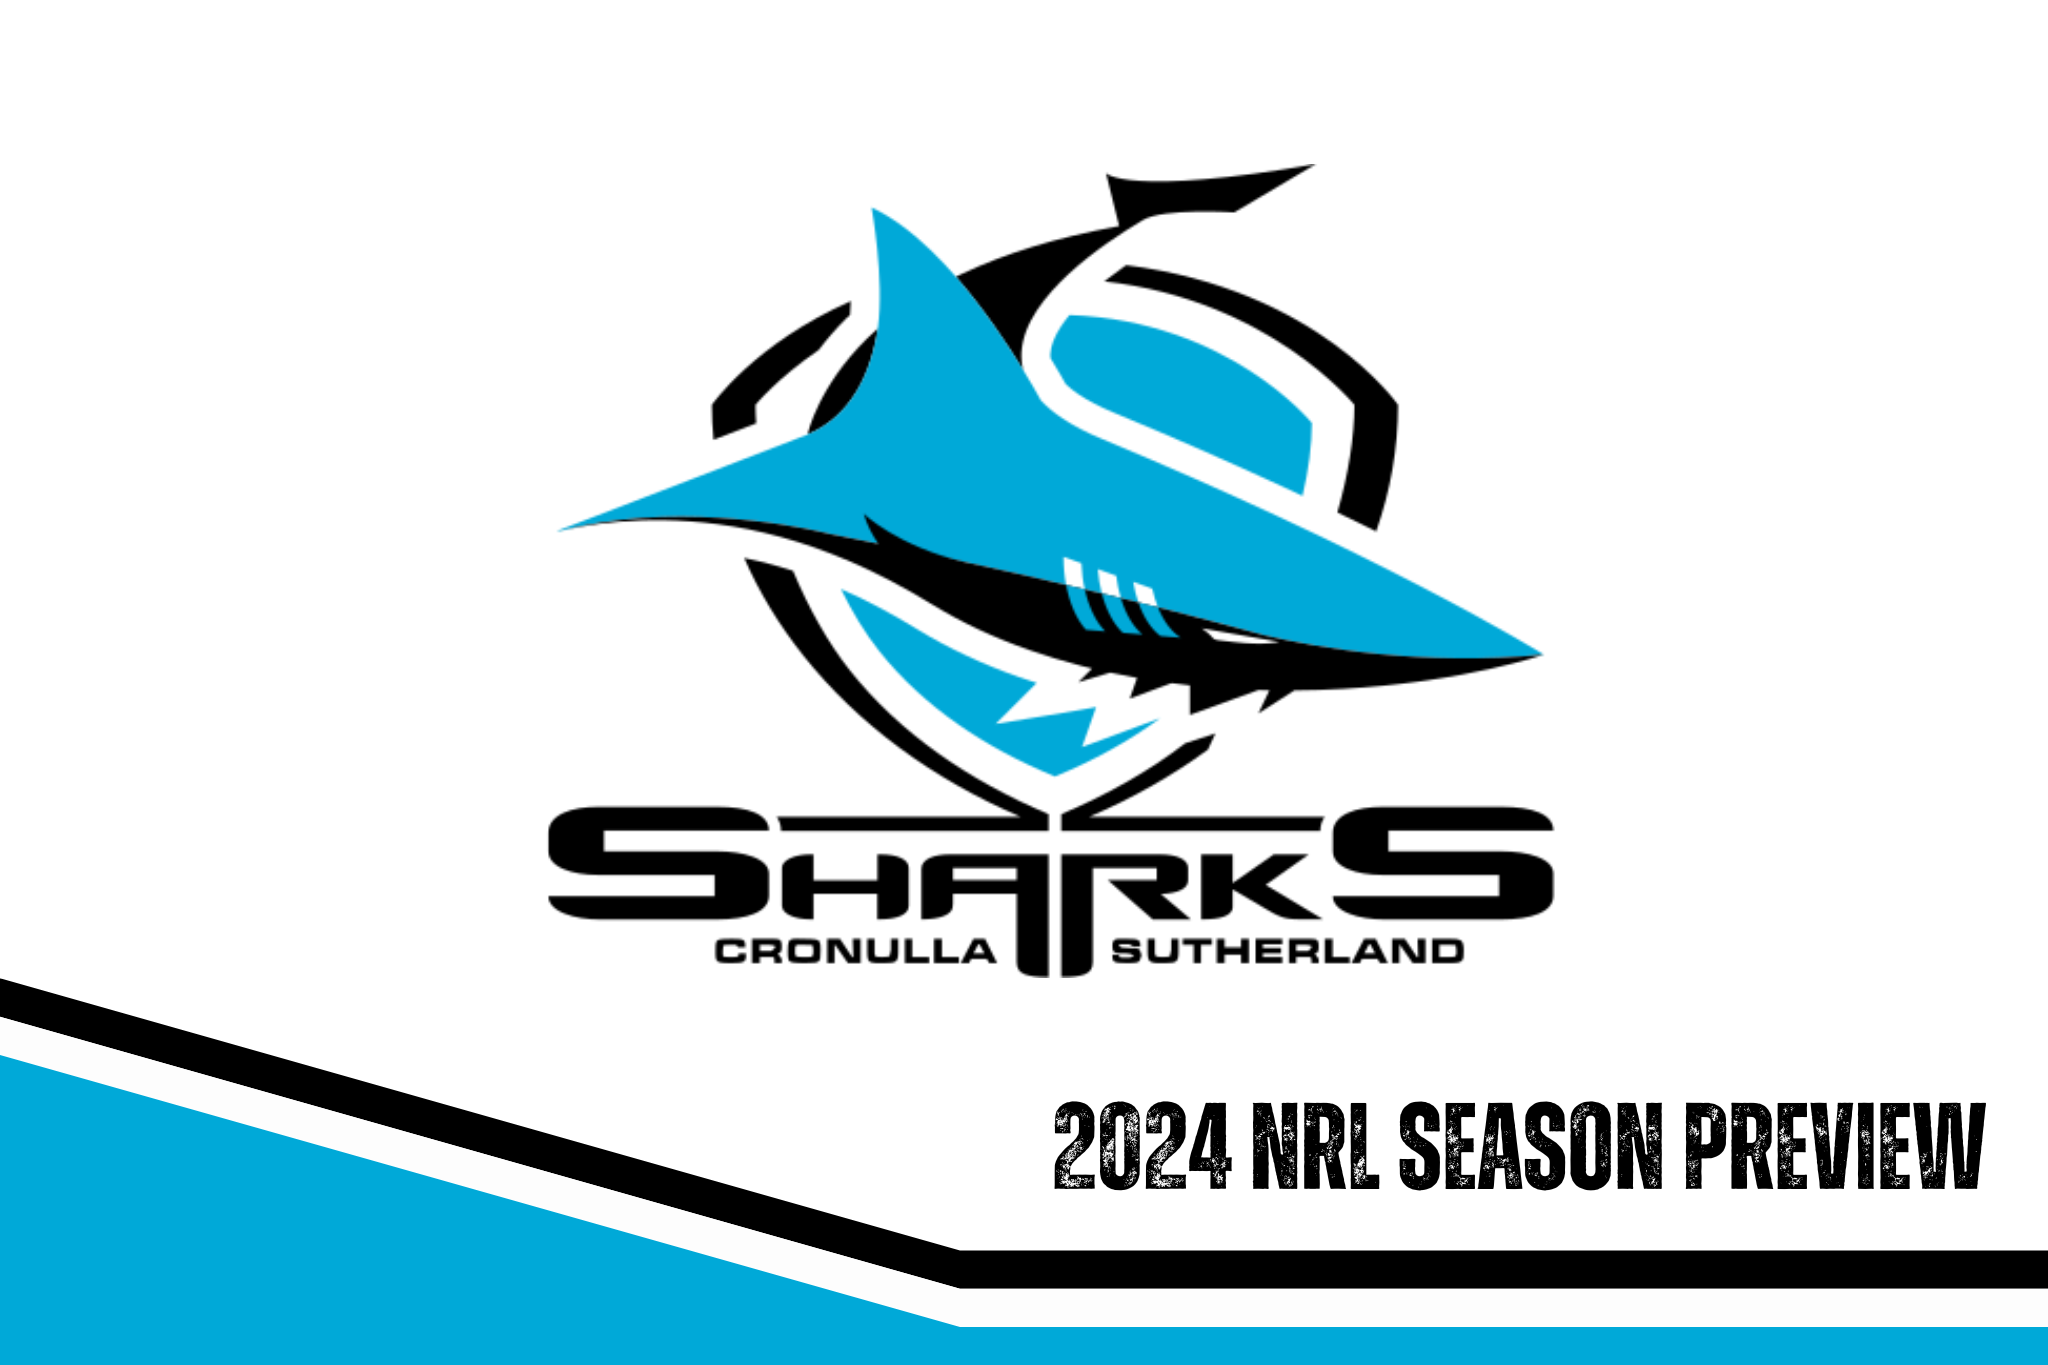 Cronulla Sharks 2024 season preview